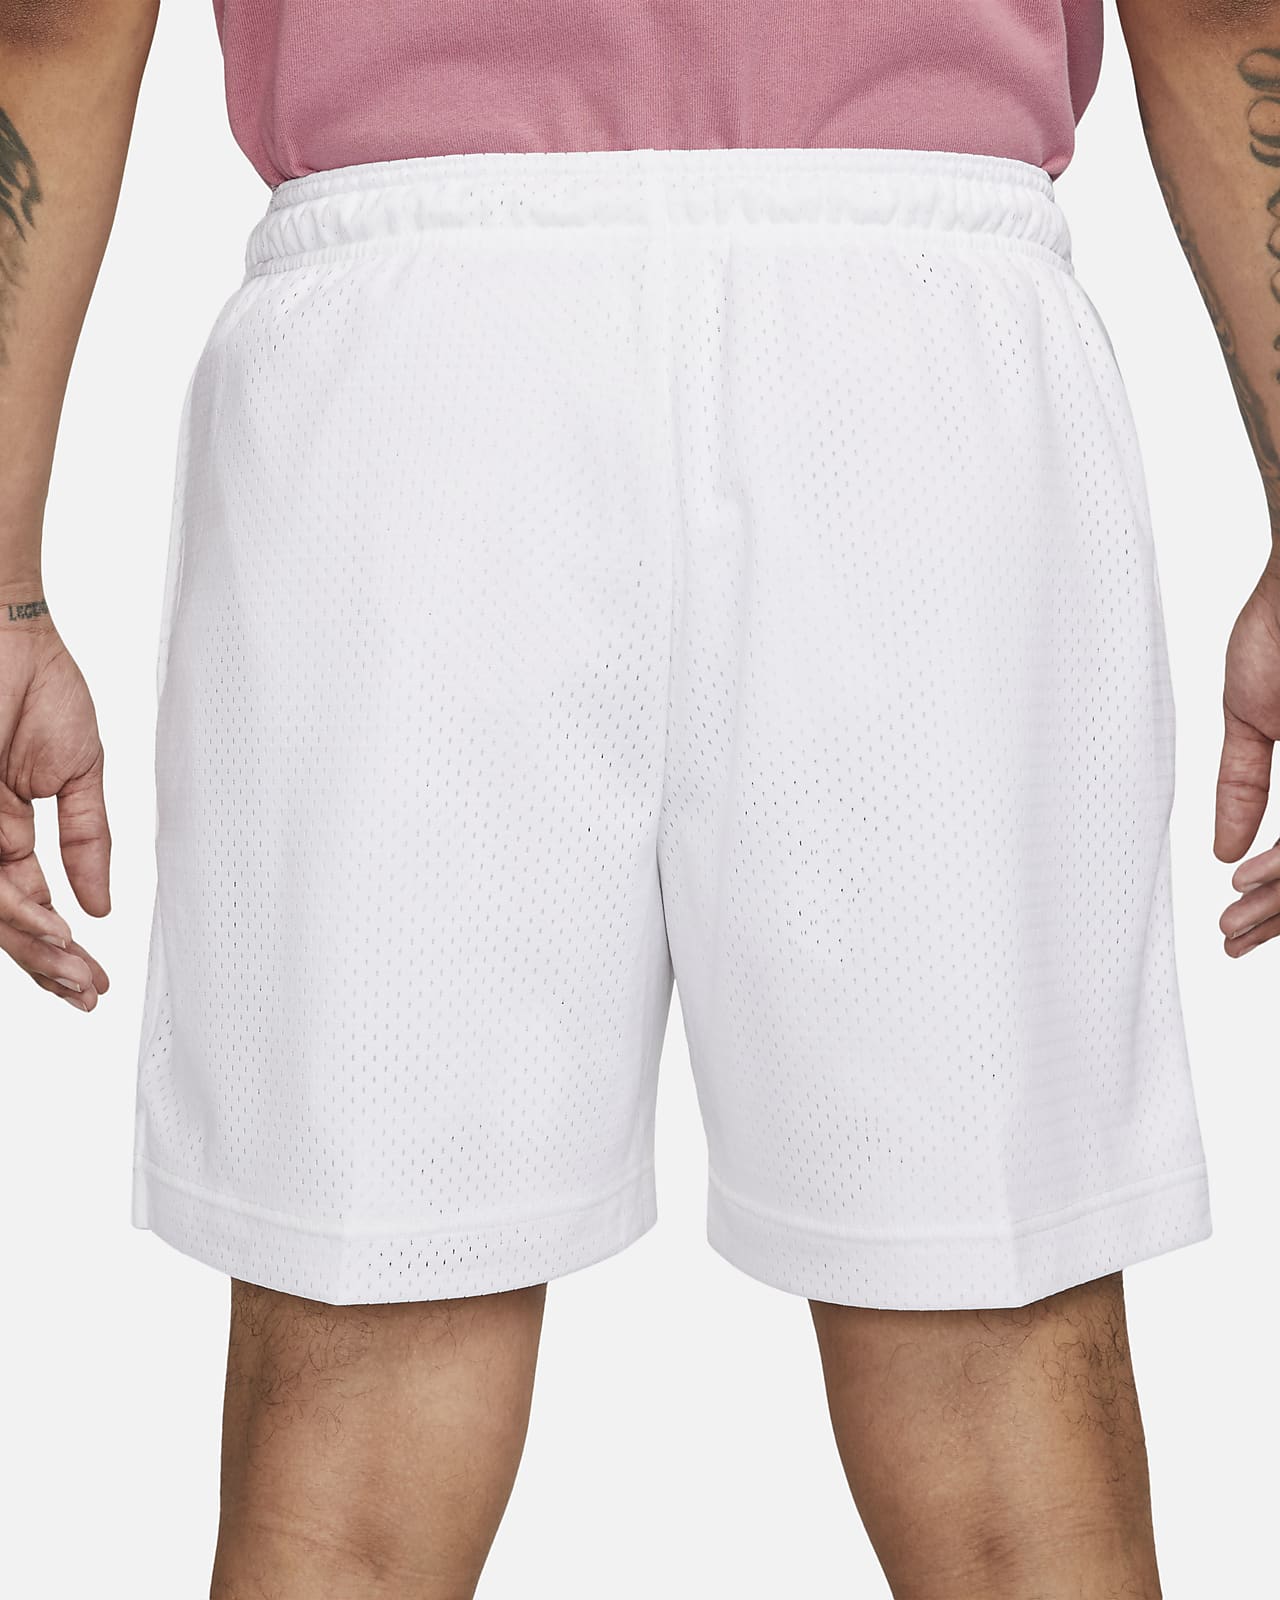 Nike Sportswear Authentics Men\'s Mesh Shorts.